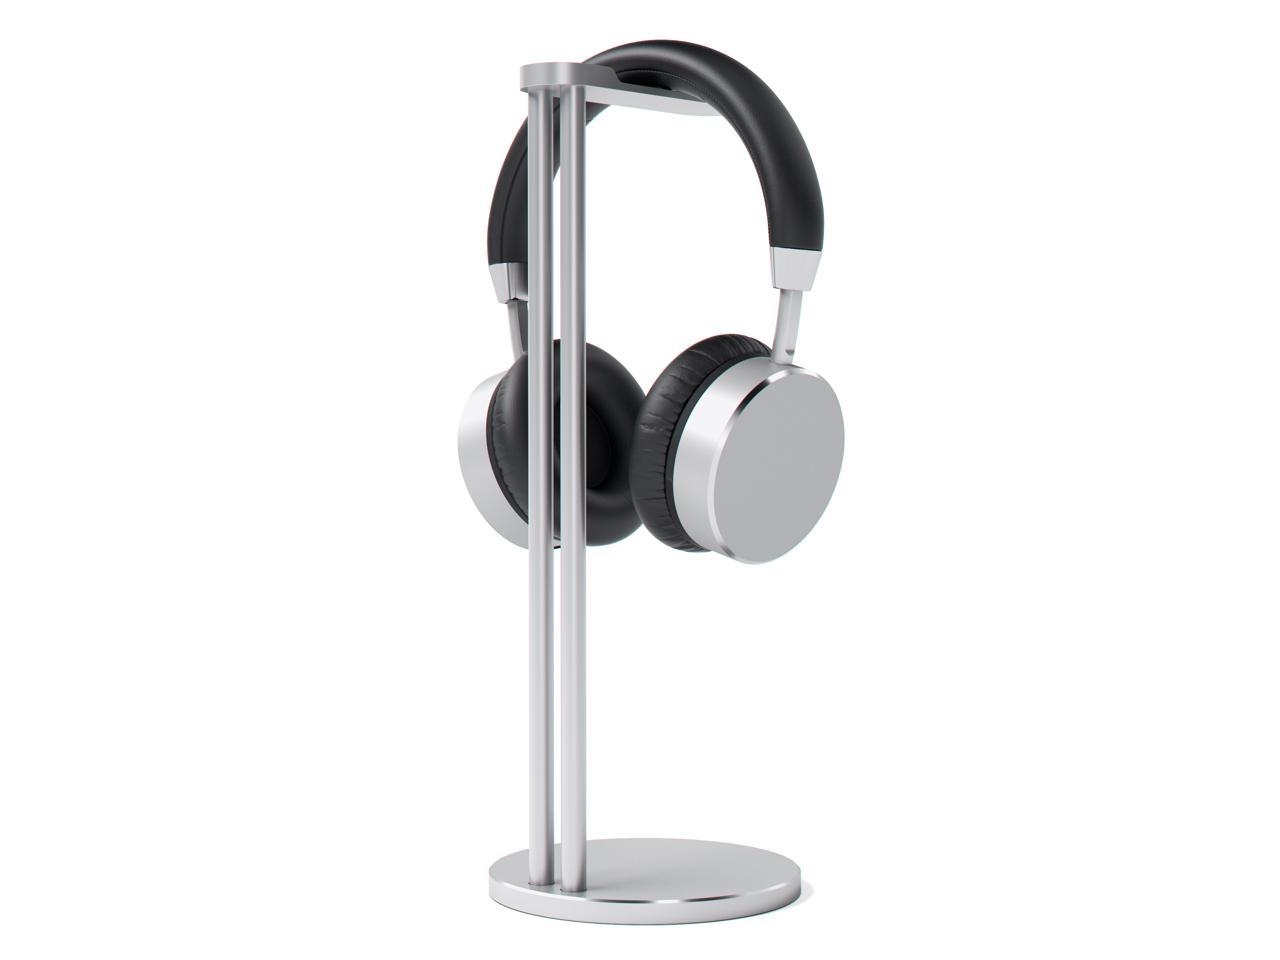 Satechi Aluminum Slim Headphone Headset Stand - Universal Fit - Bose, Sony, Beats, JBL, Panasonic, AKG, Audio-Technica, Sennheiser, Shure and more (Silver)